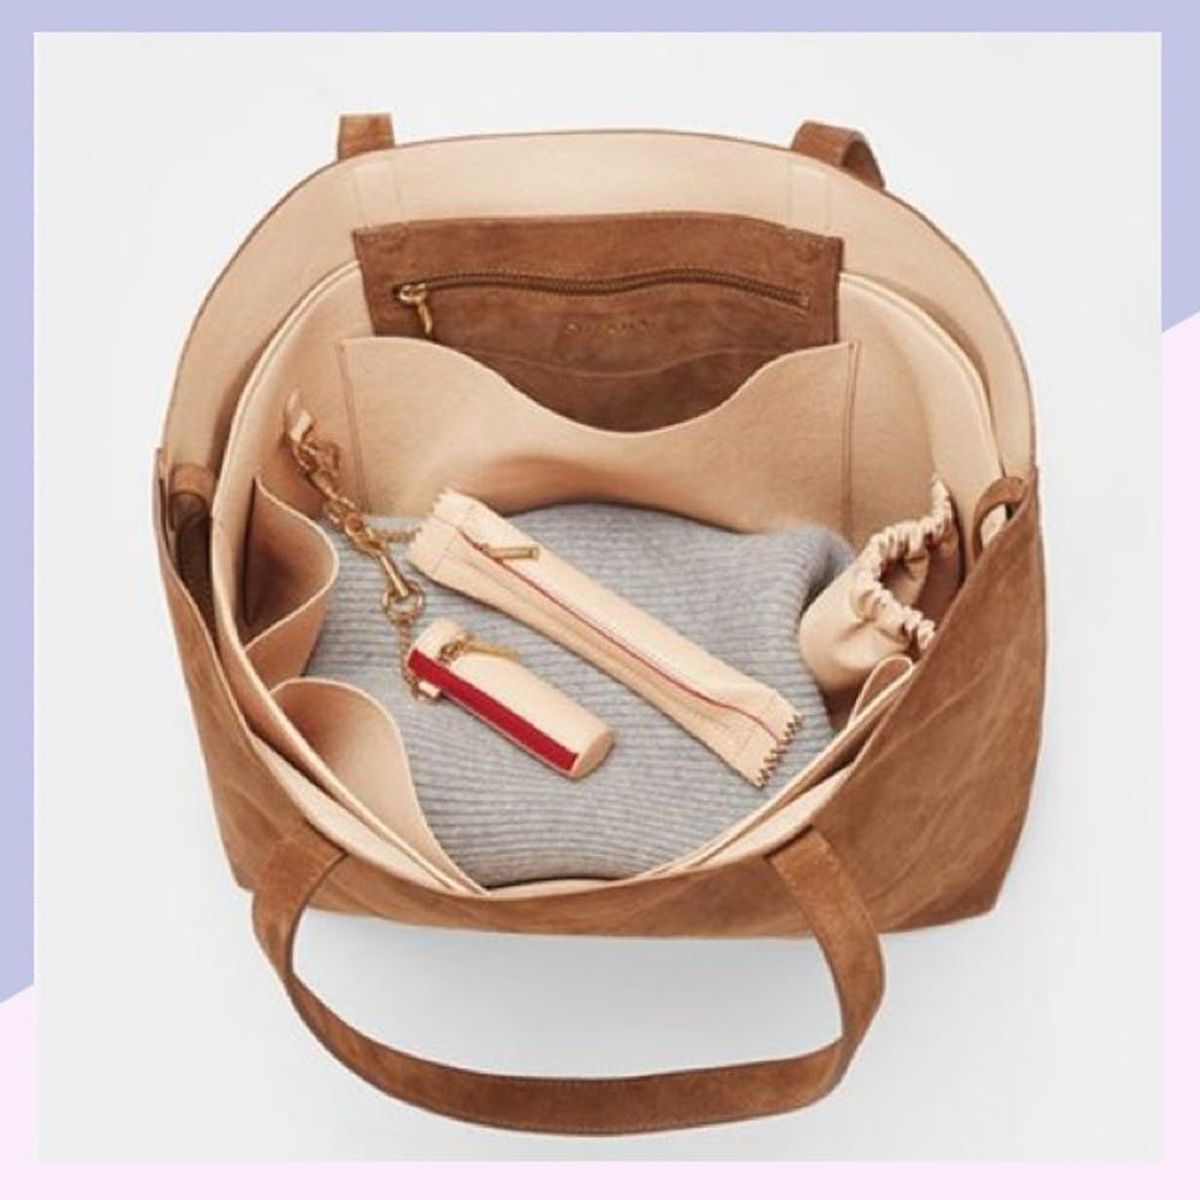 Cuyana’s Latest Handbag Collection Is a Busy Girl’s Organized Dream